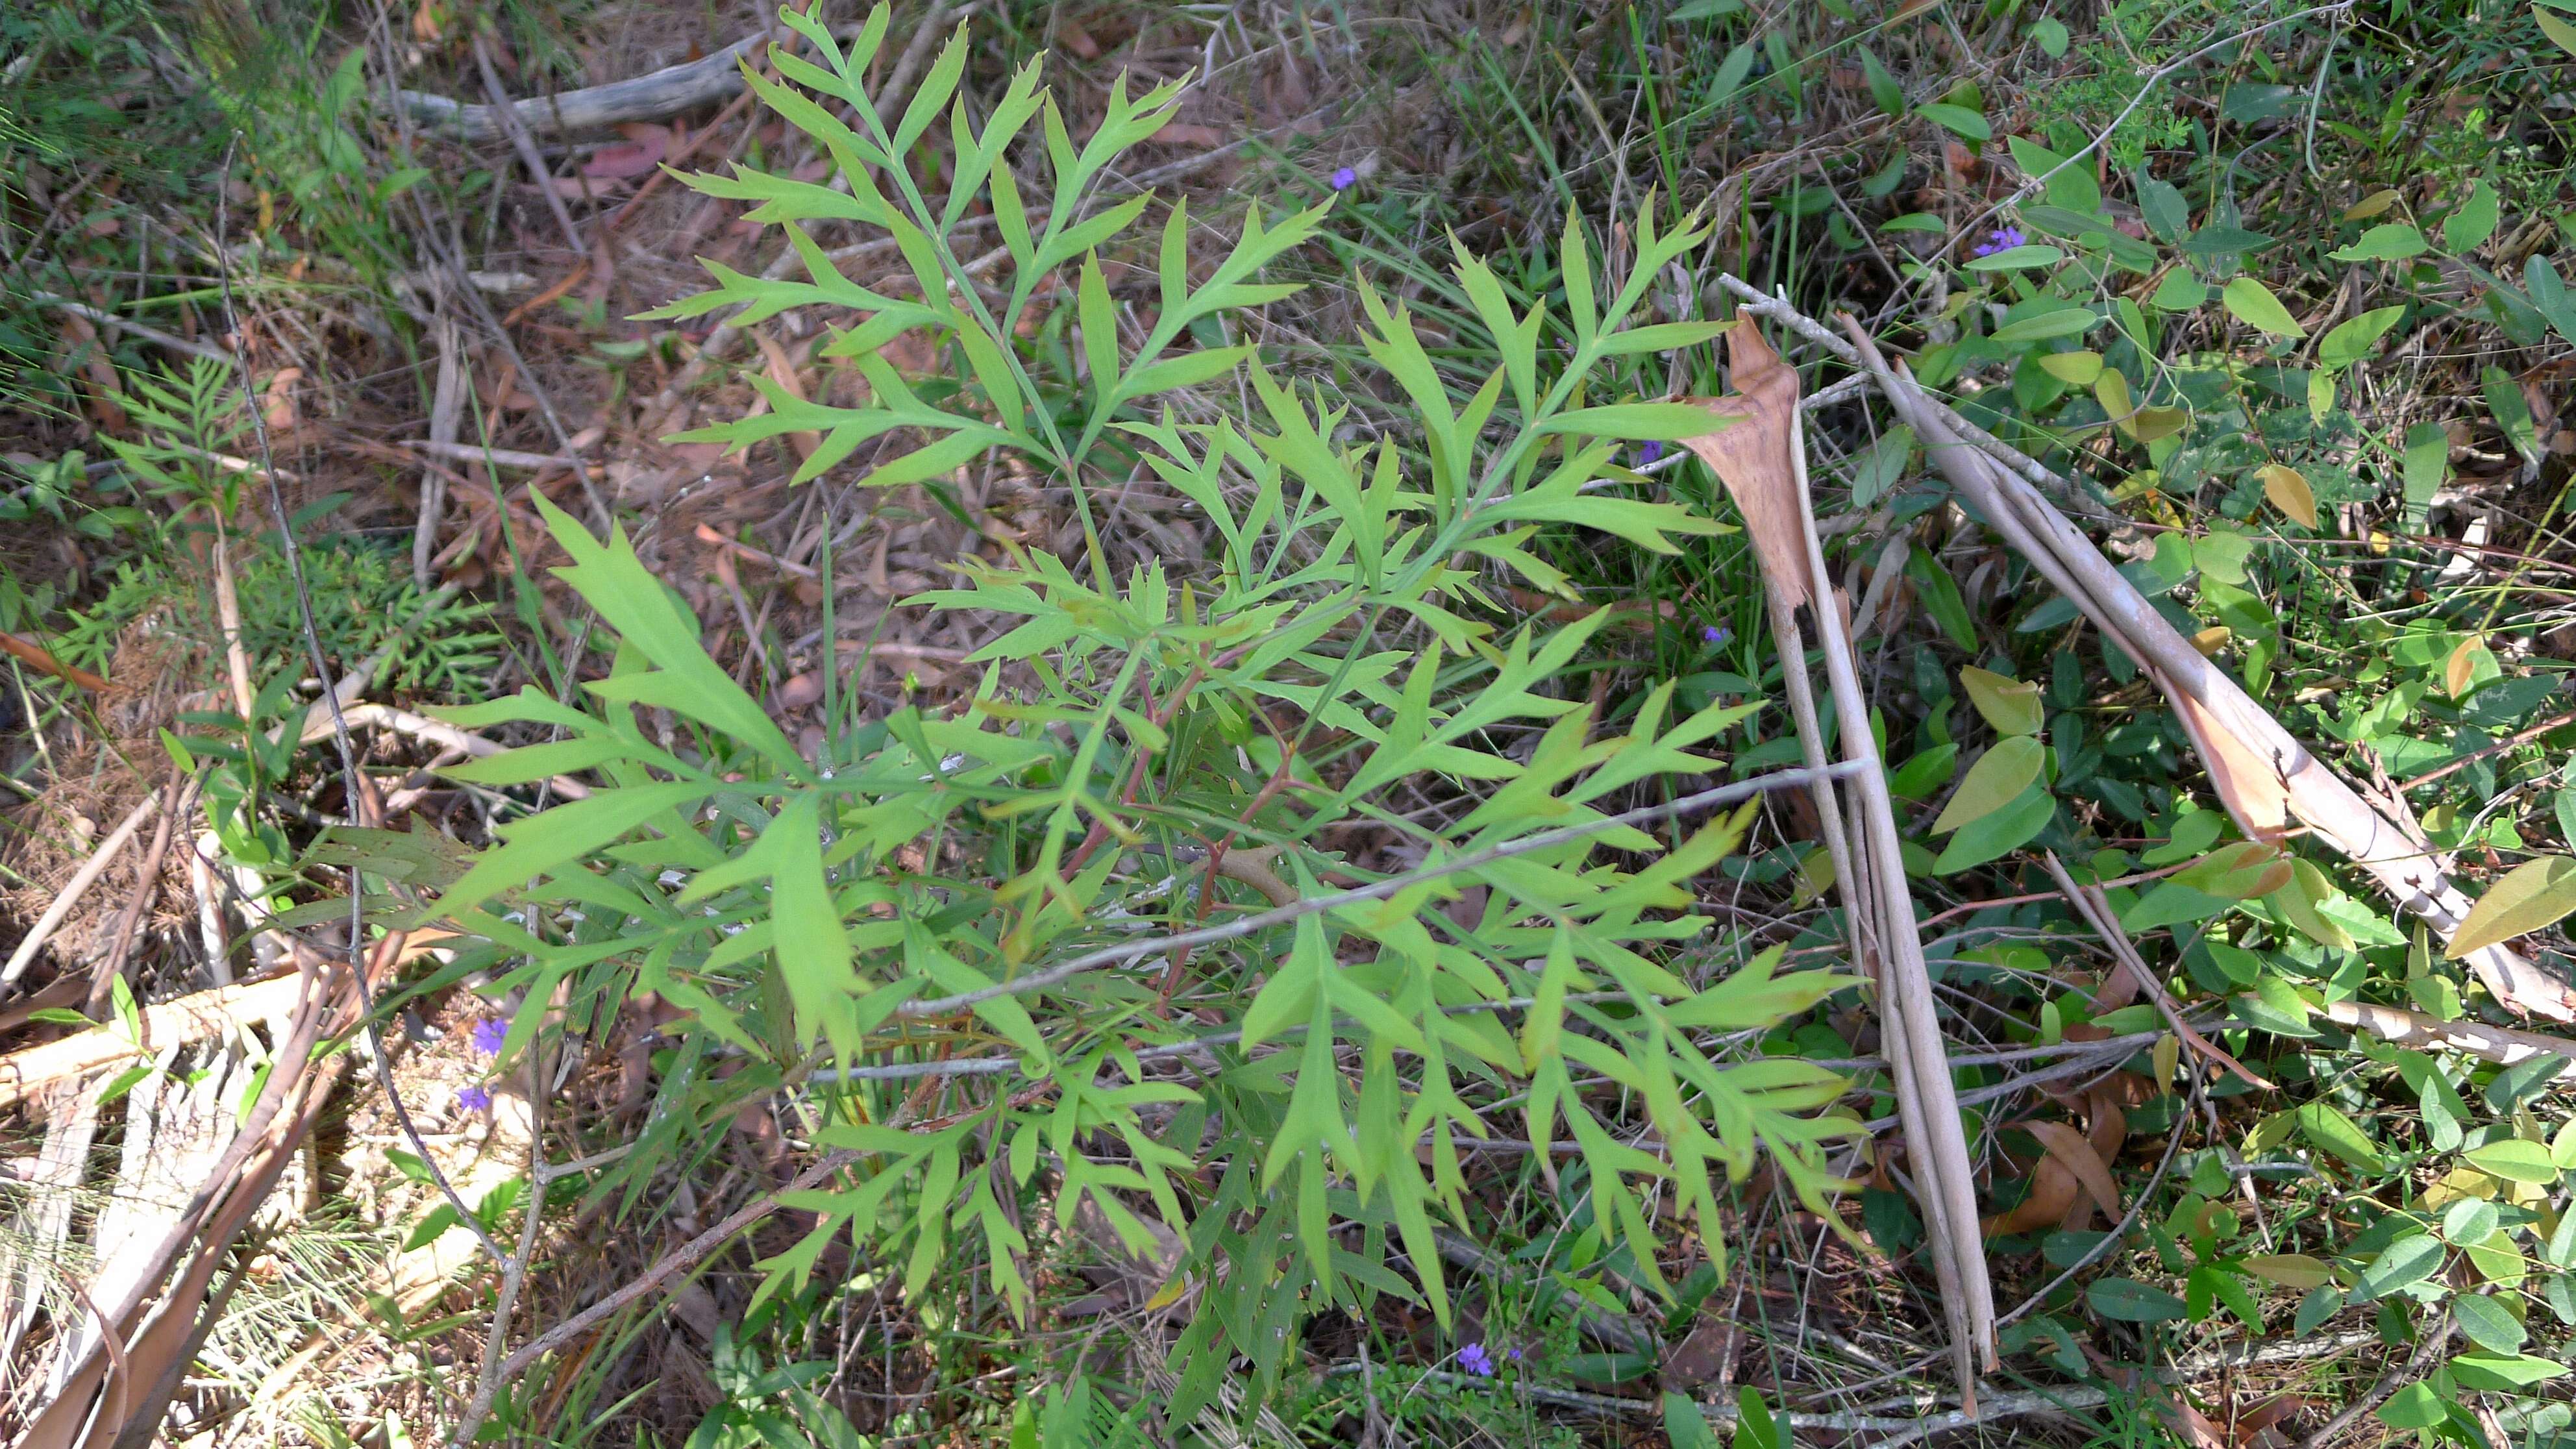 Image of Lomatia silaifolia (Sm.) R. Br.